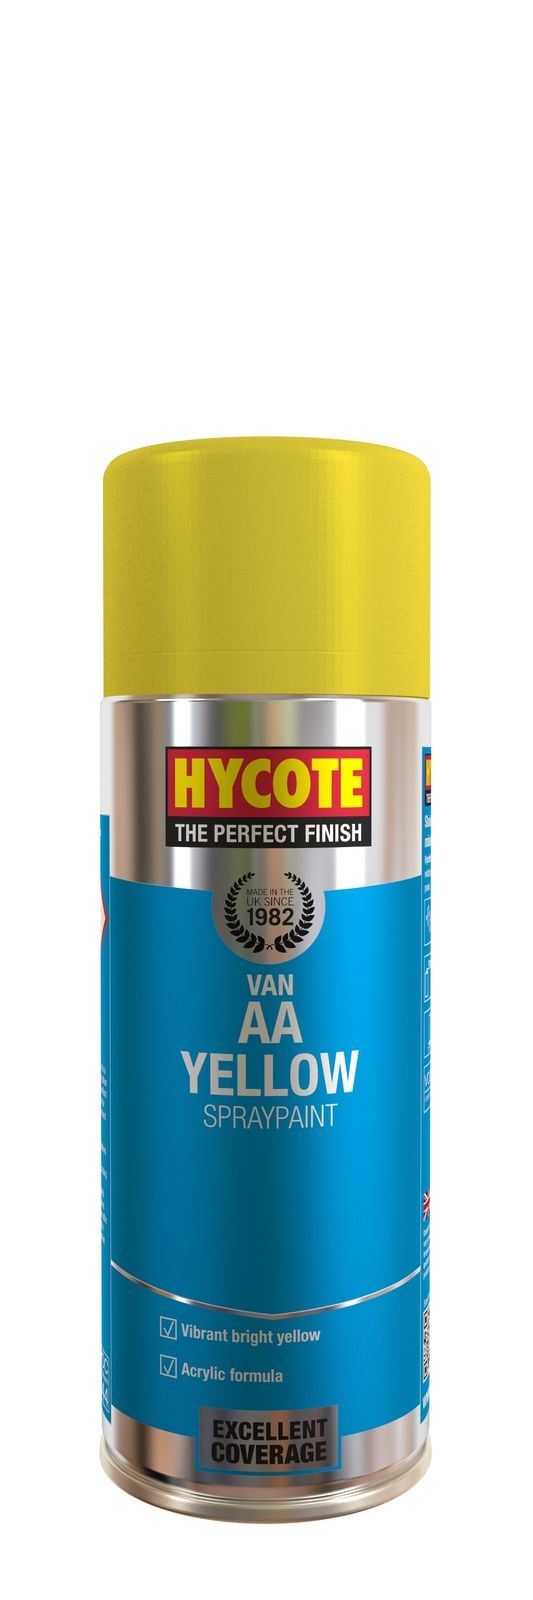 Hycote AA Van Yellow Paint - 400ml